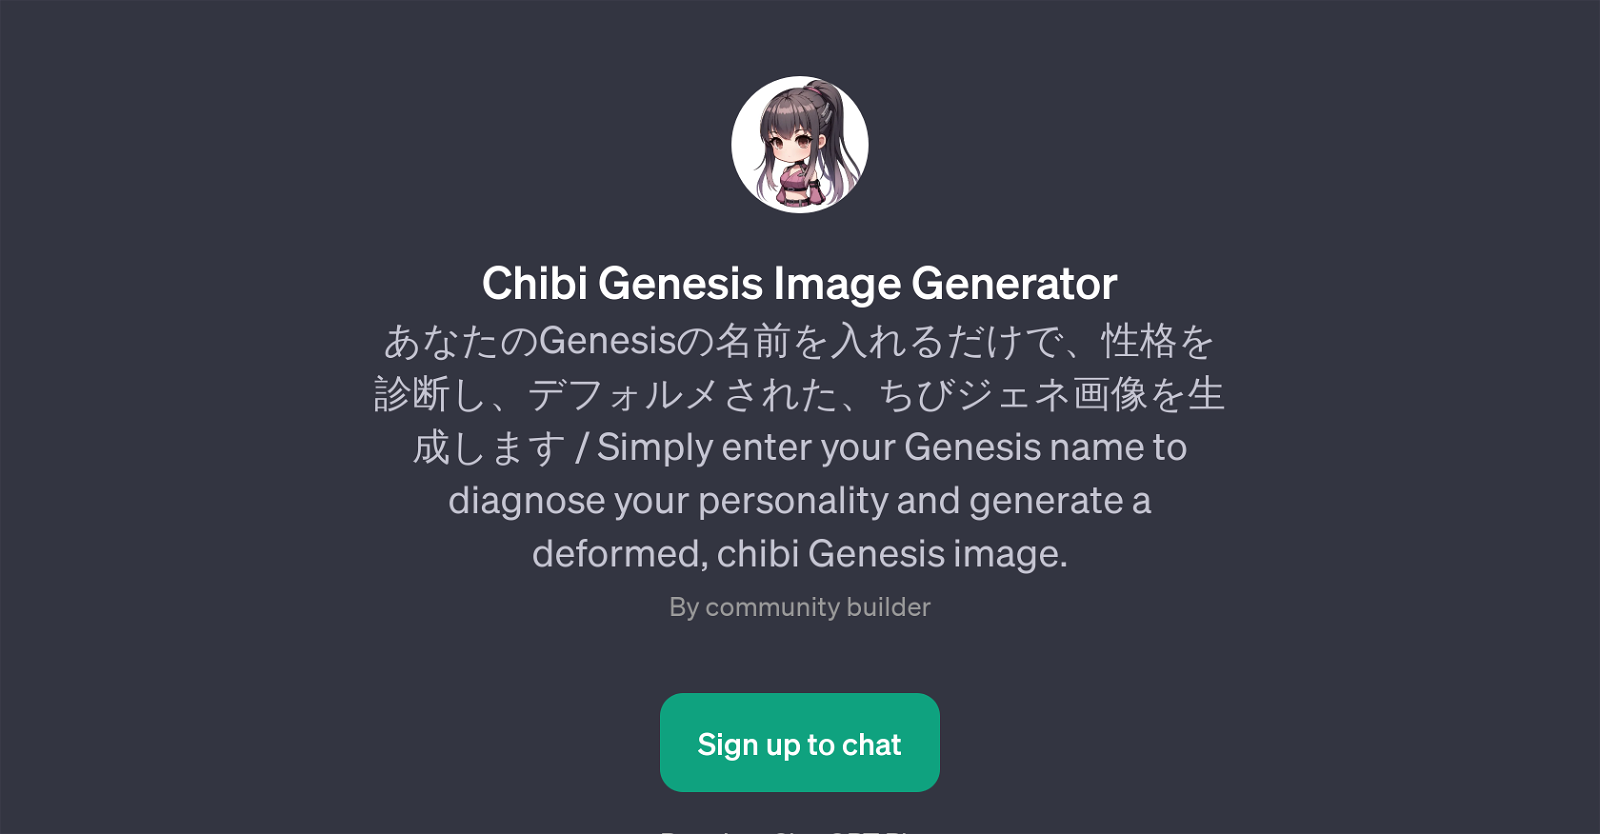 Chibi Genesis Image Generator website